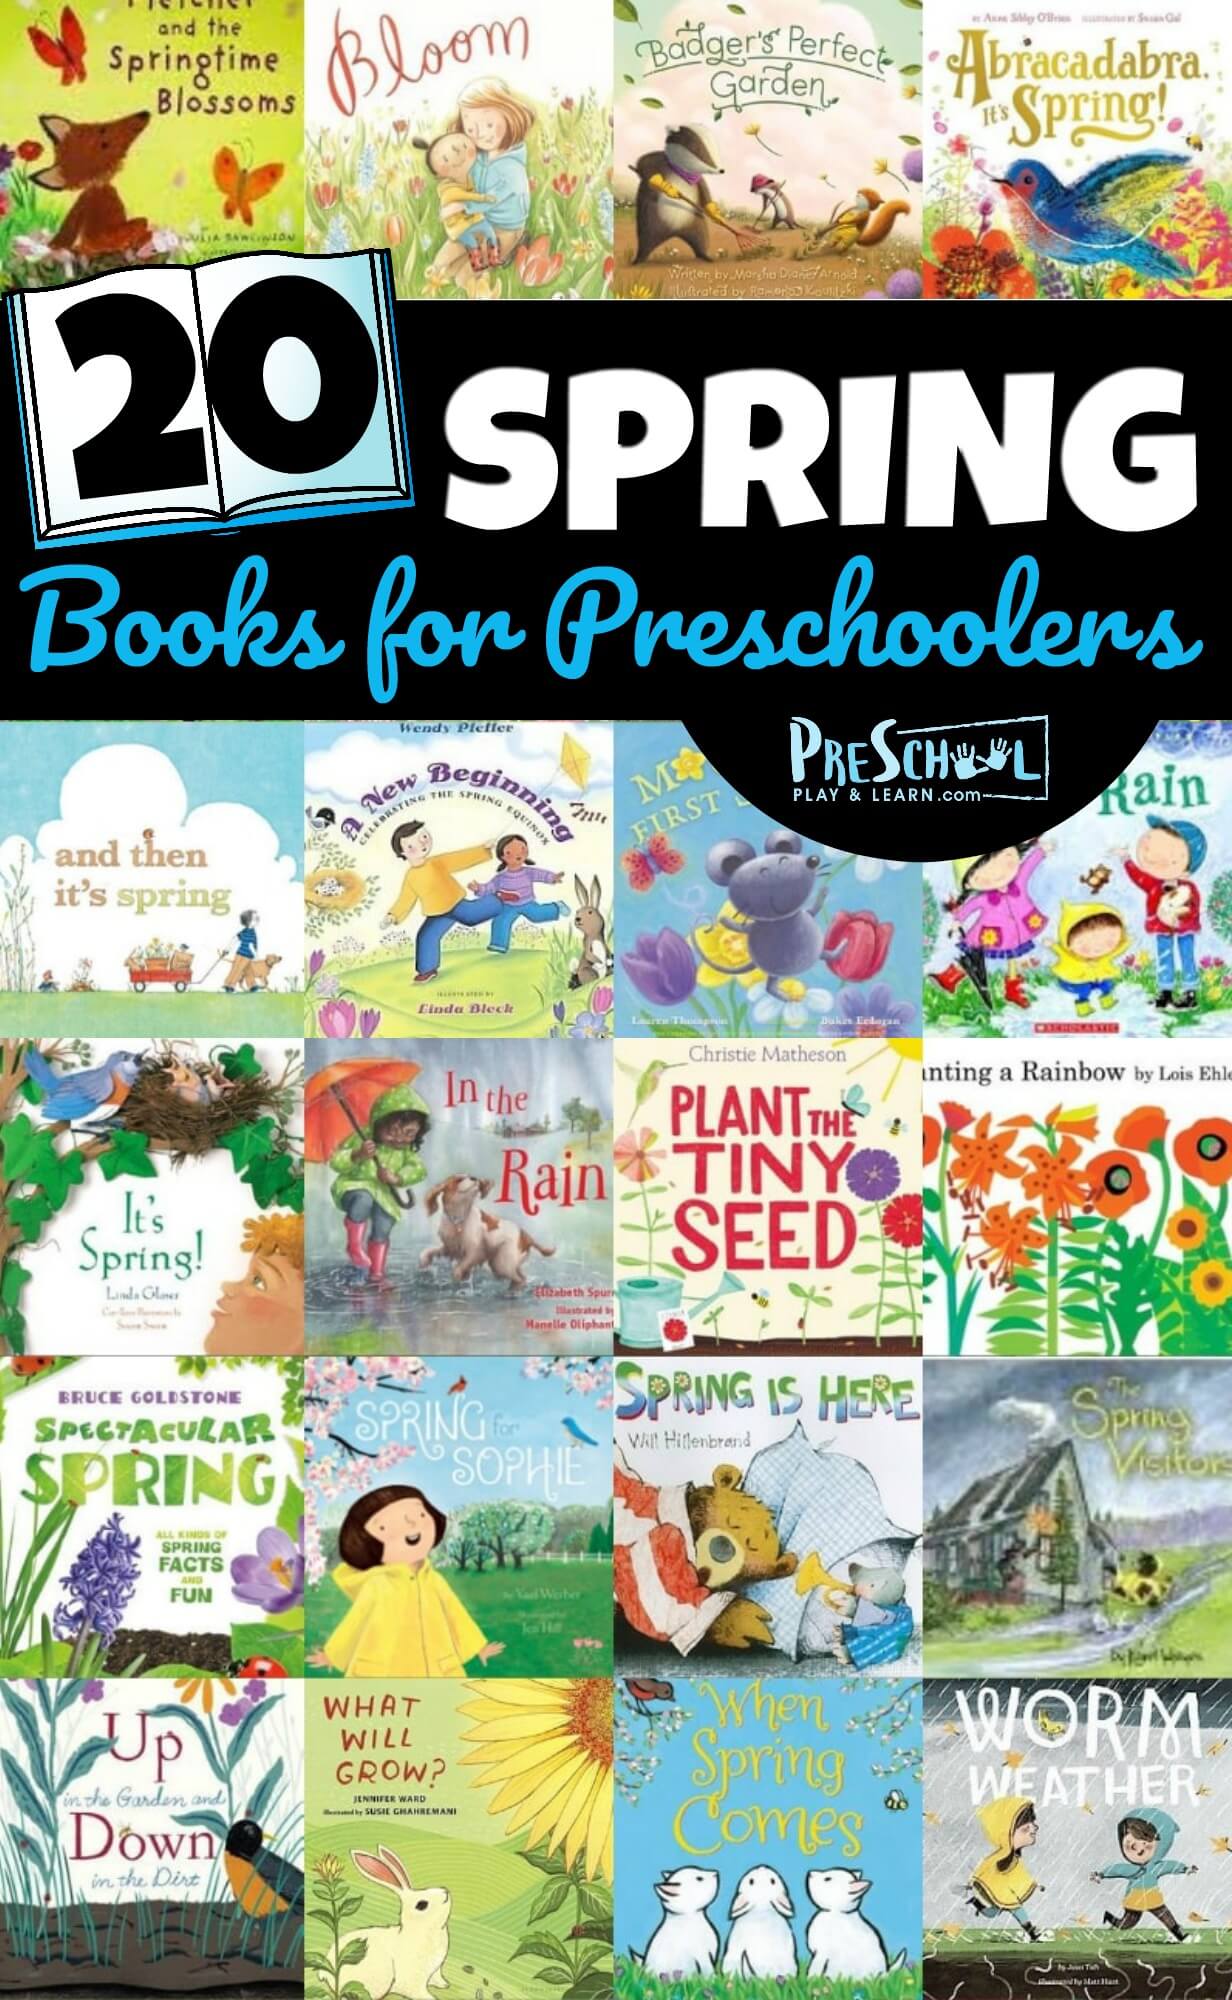 20-spring-books-for-preschoolers